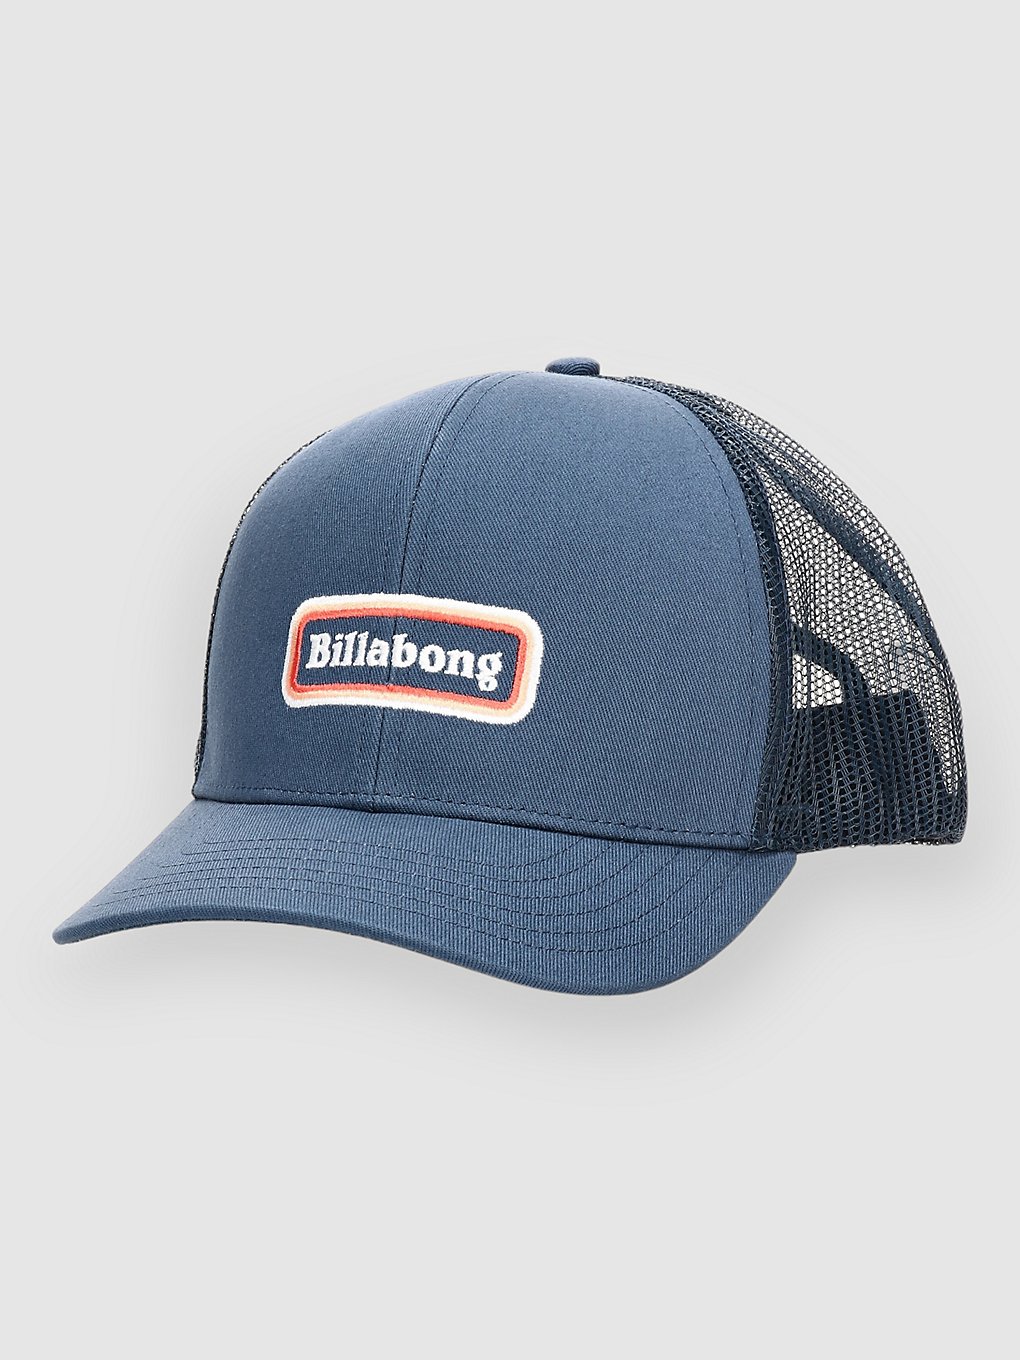 Billabong Walled Trucker Cap denim blue kaufen